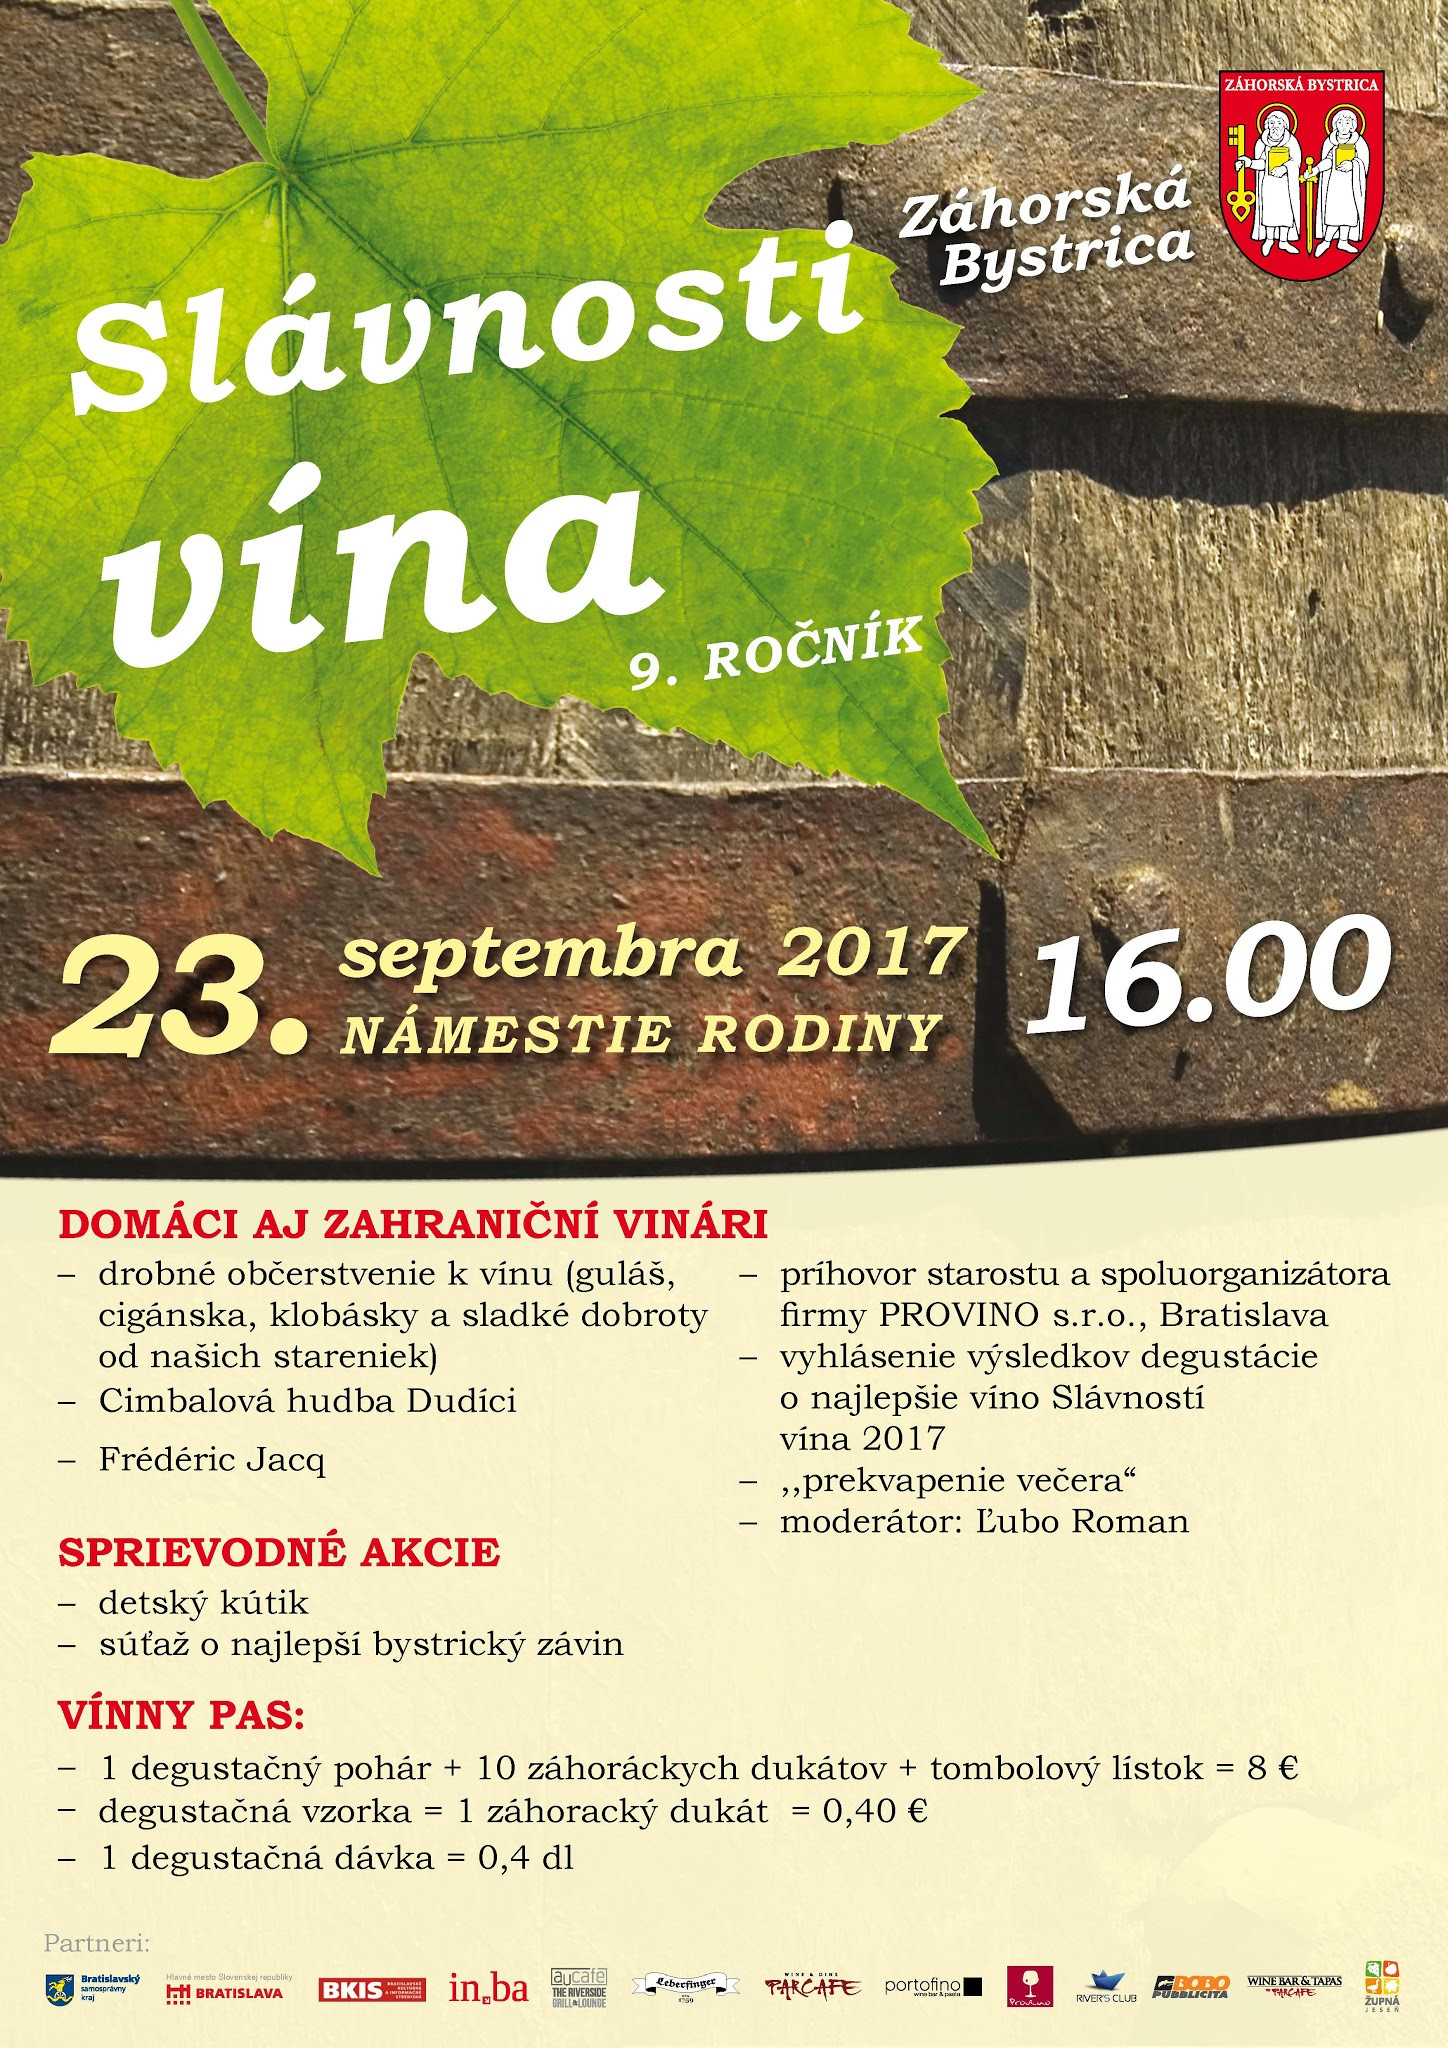 Slávnosti vína v Záhorskej Bystrici (23.9.2017)